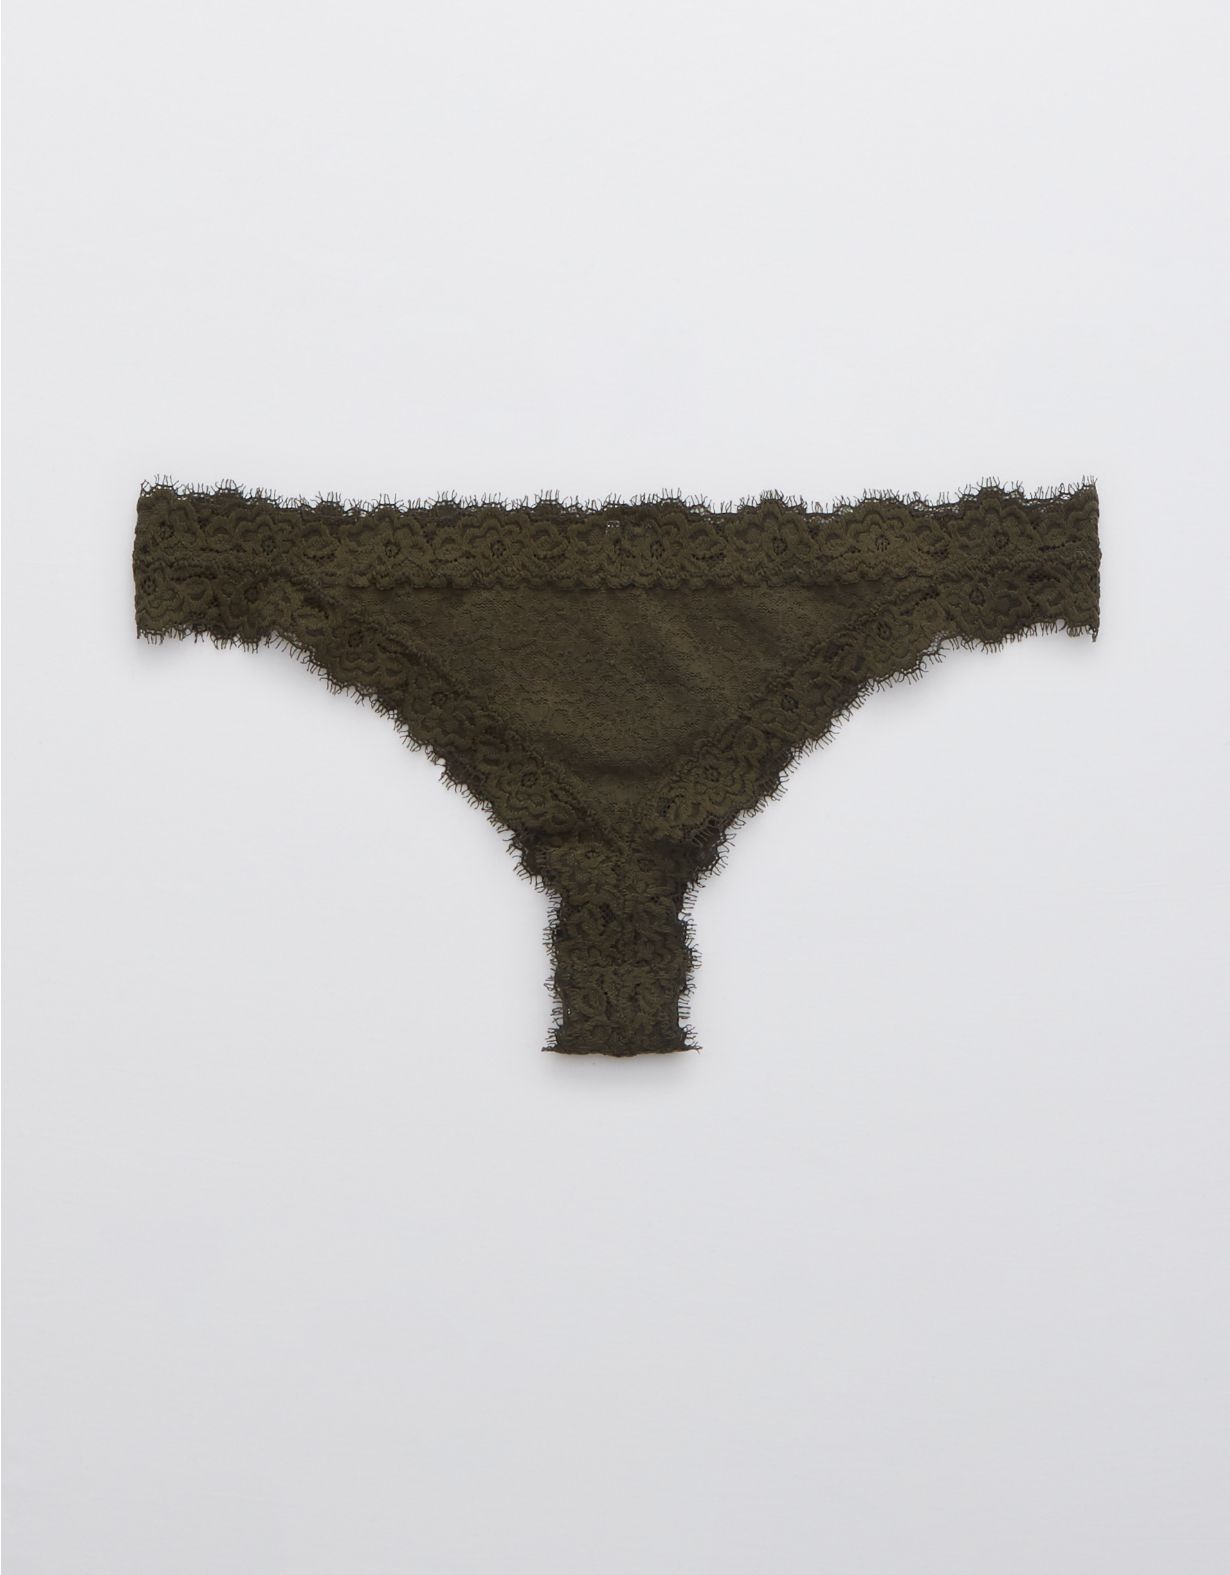 Aerie Eyelash Lace Thong Underwear